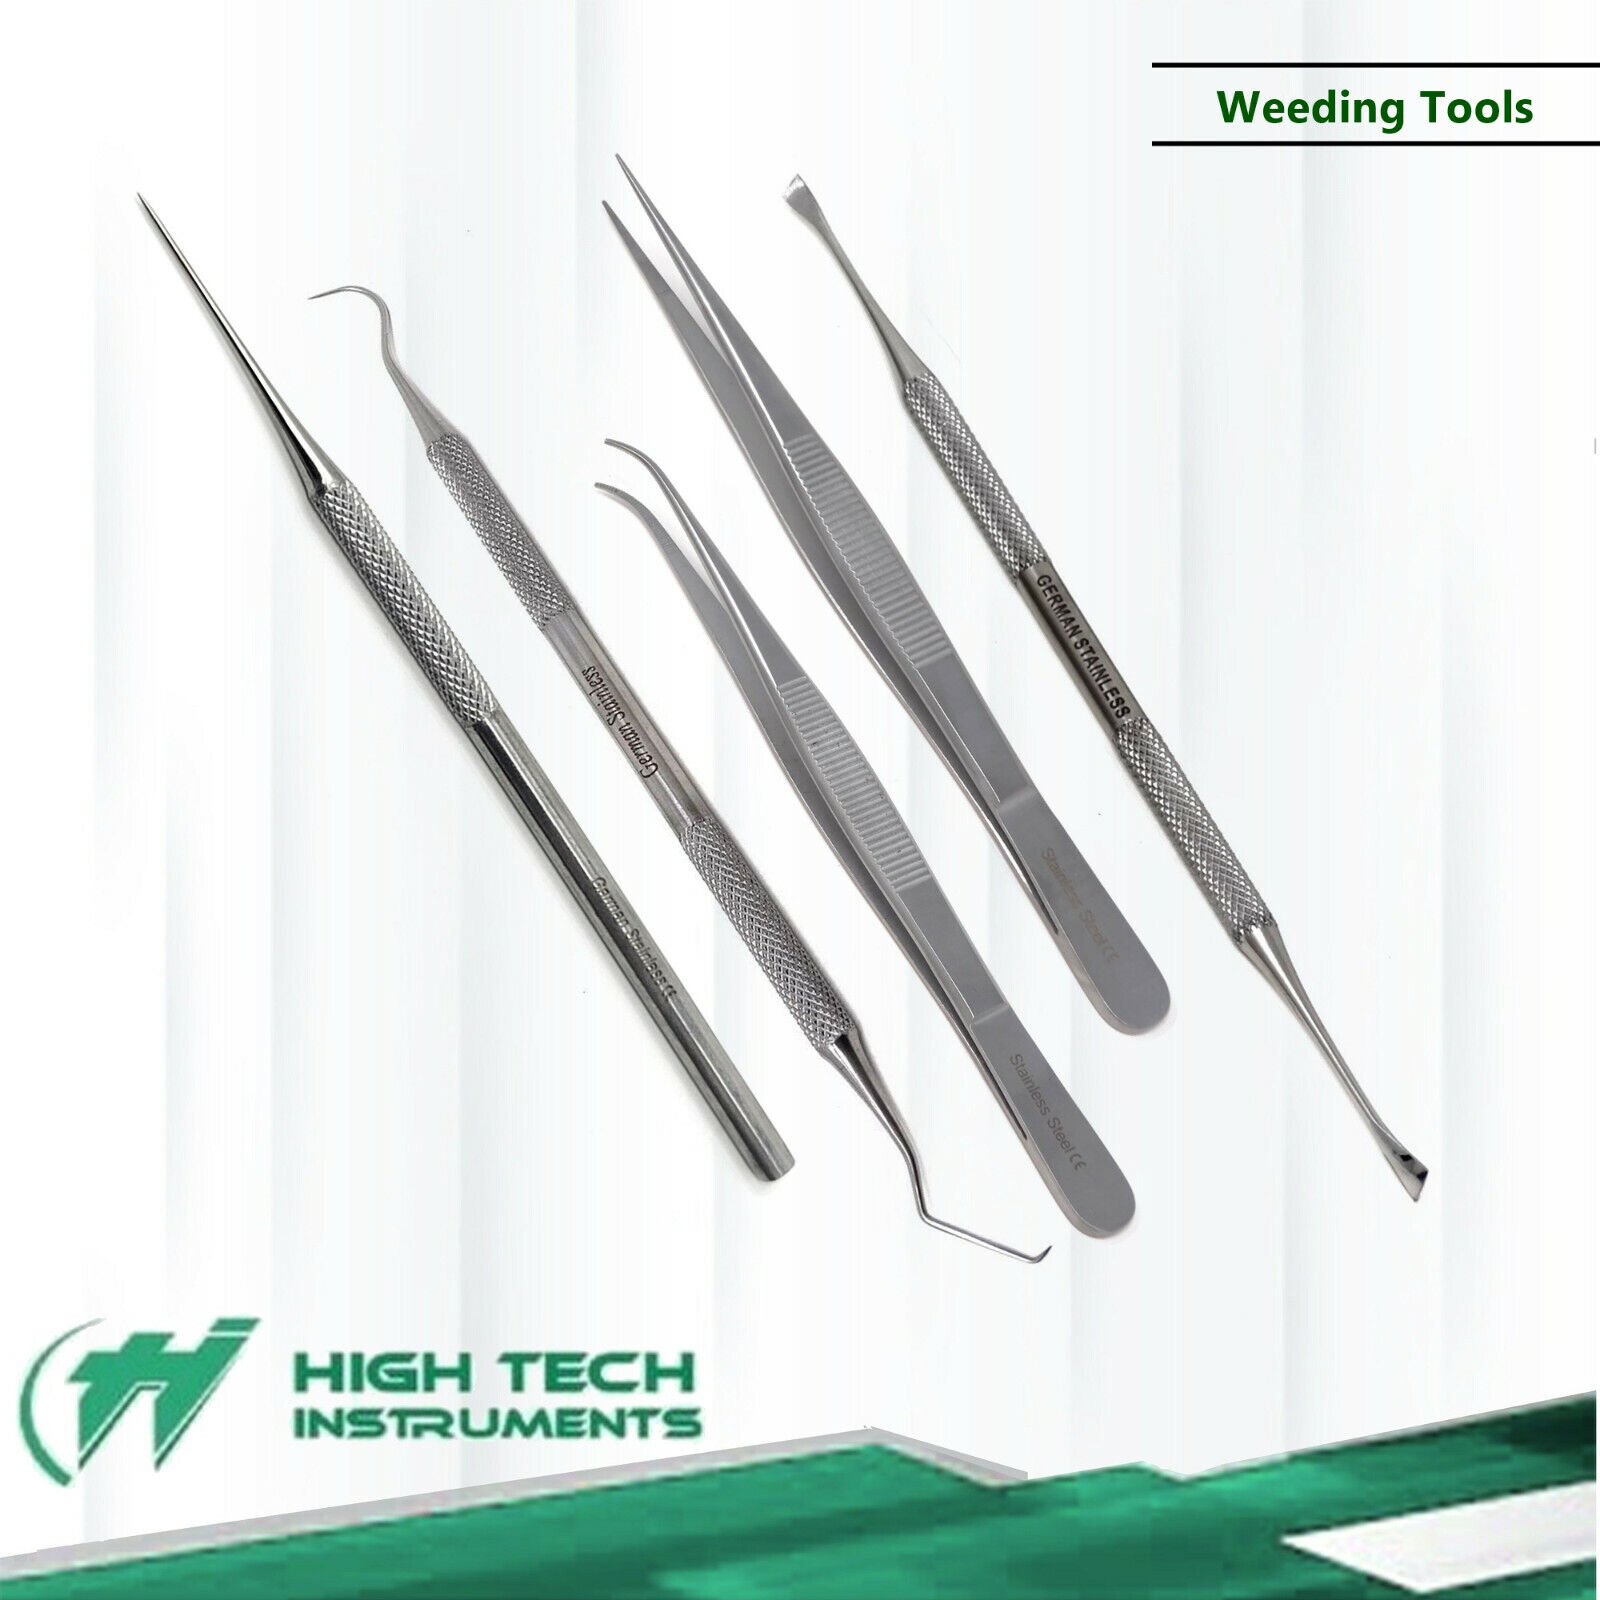 Craft Weeding Vinyl Basic Tool Set Precision Stainless Steel Crafting Tools Kit hti brand Does Not Apply - фотография #3